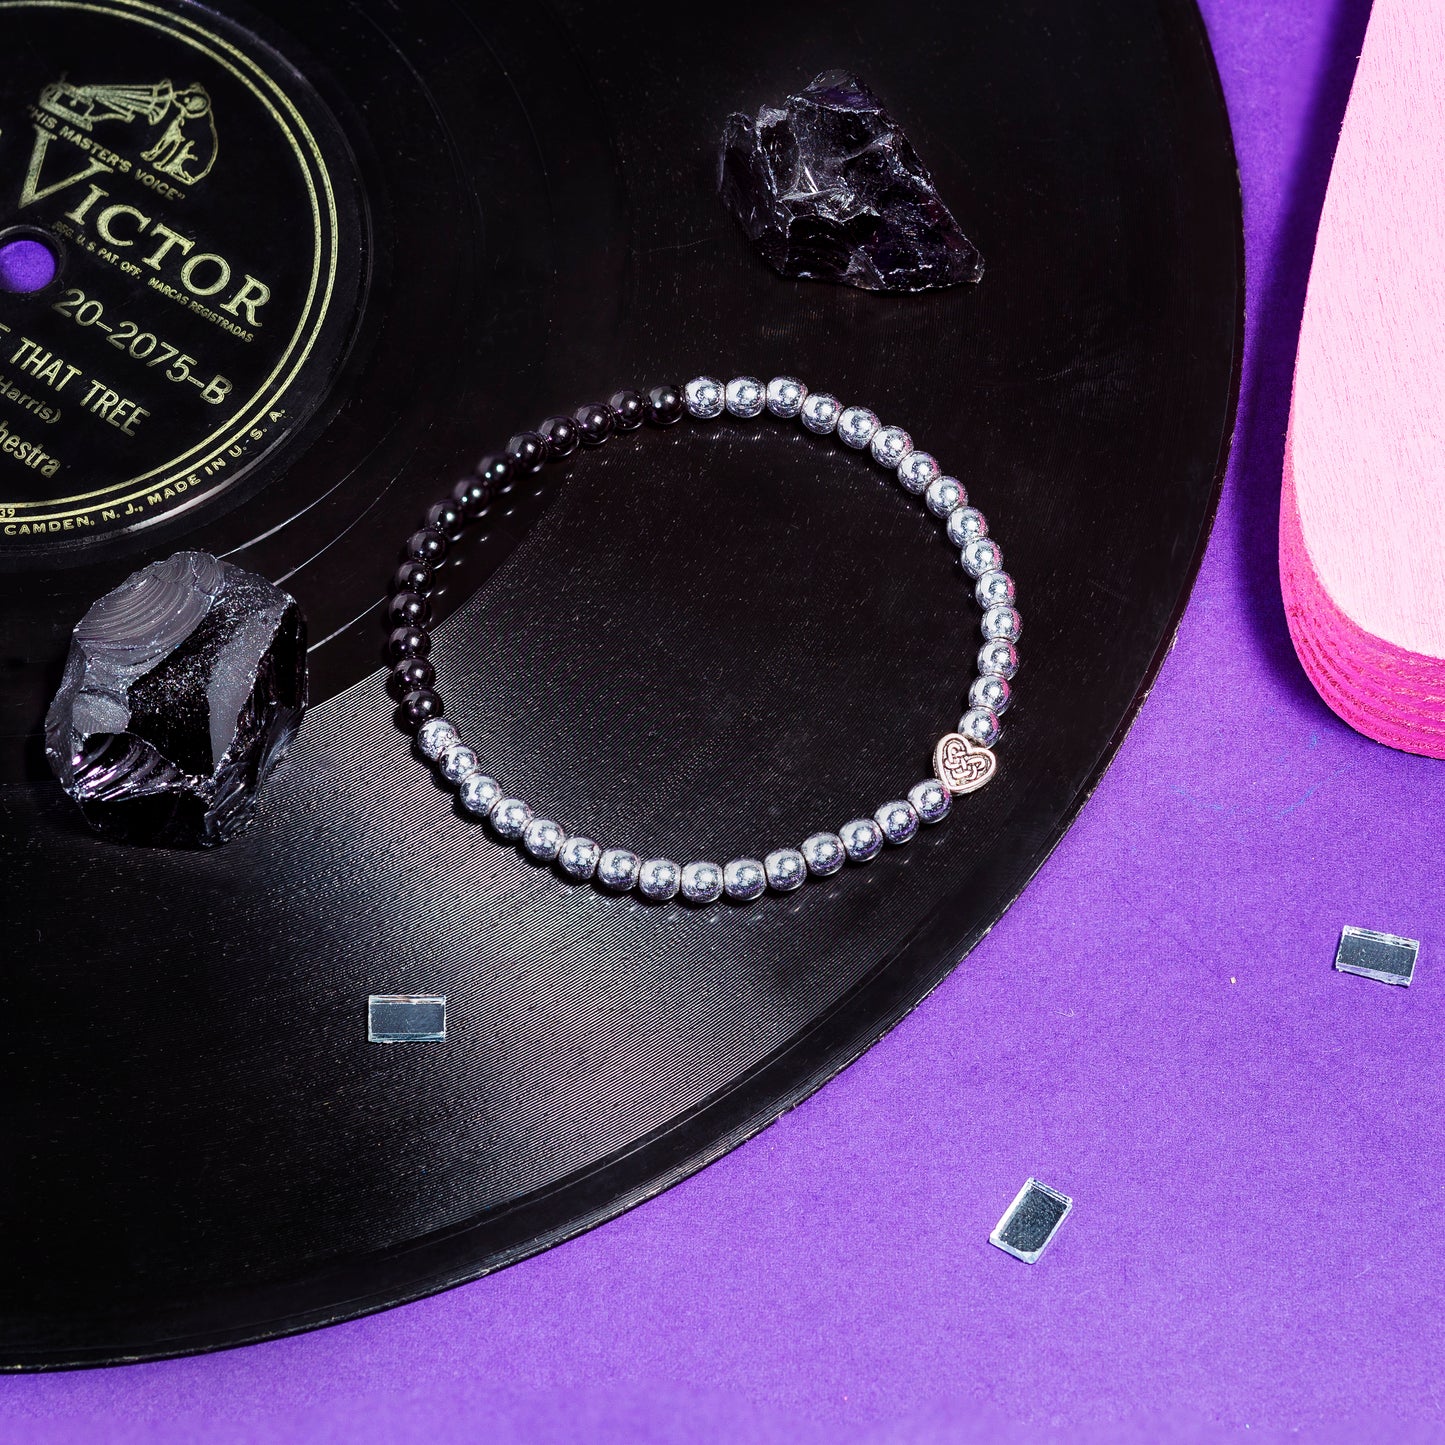 Obsidian & Hematite Mini Gemstone Bracelet III